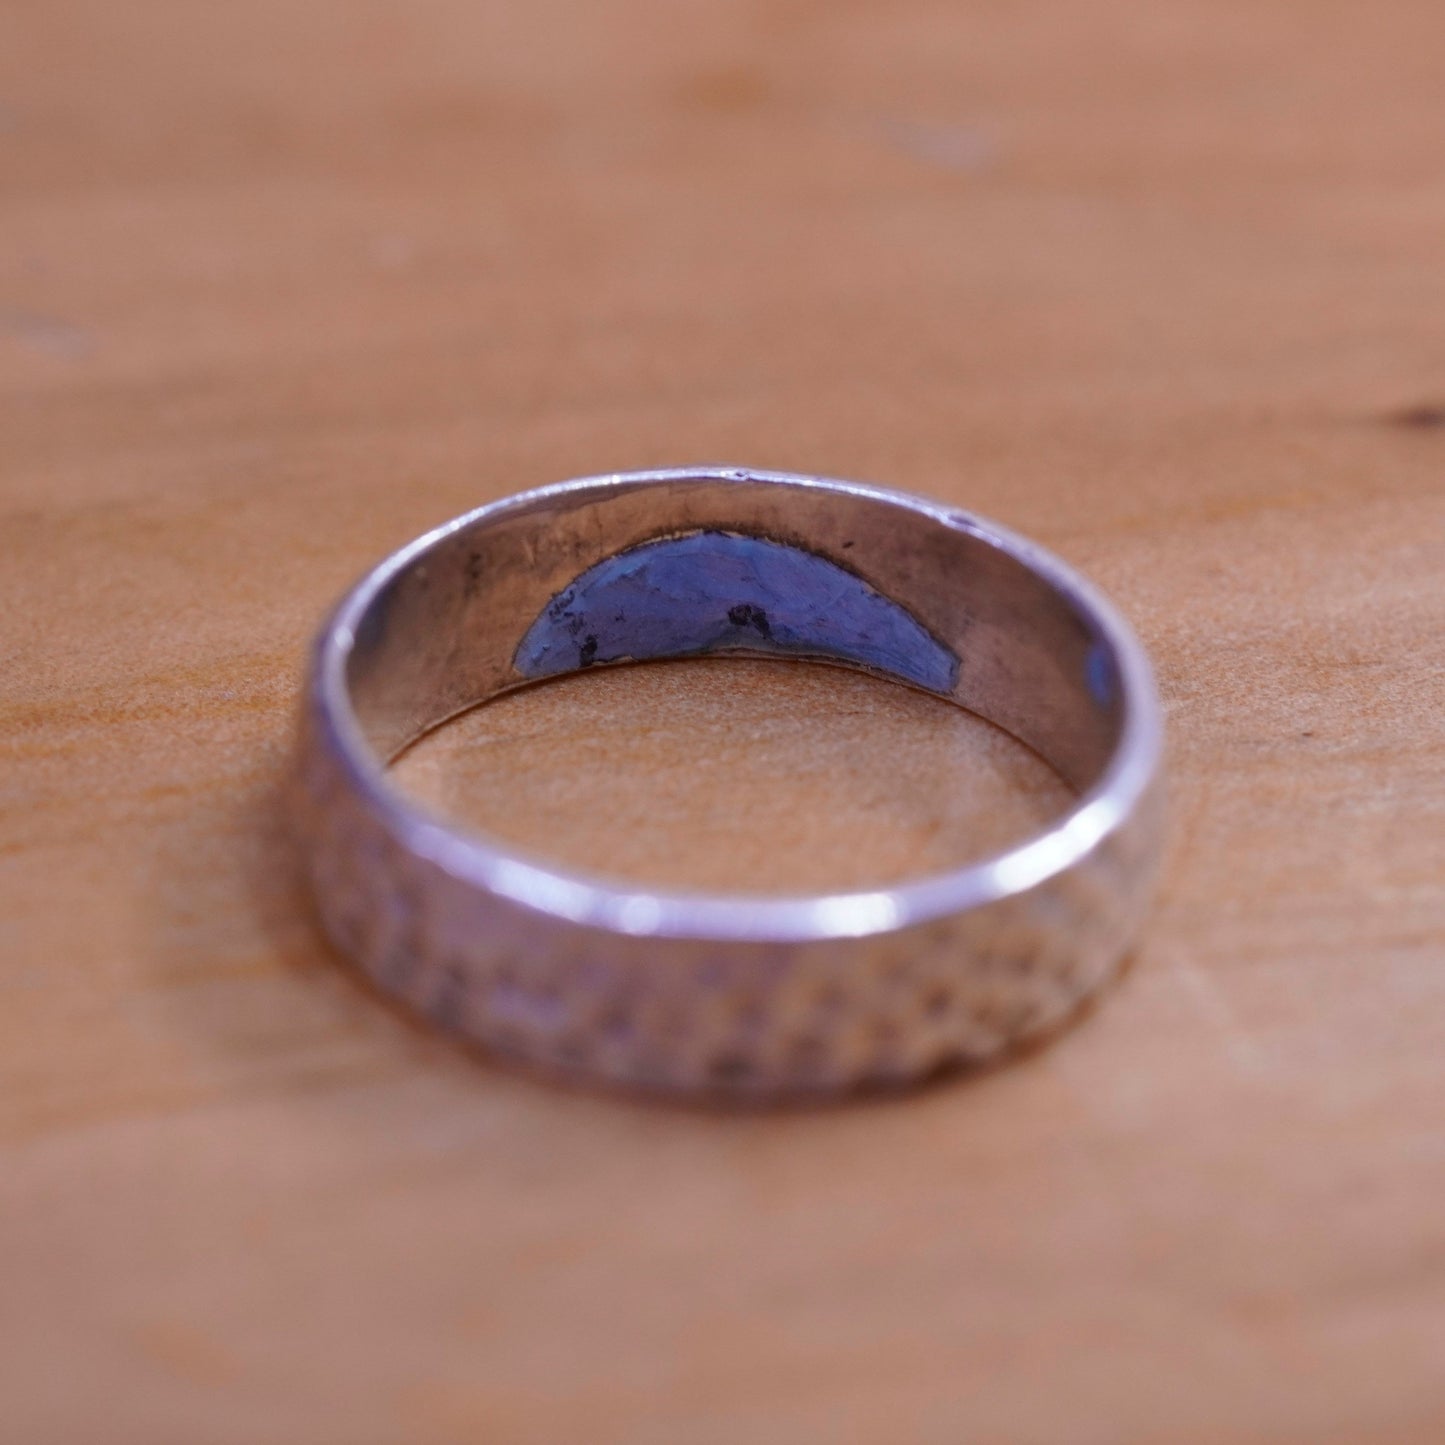 size 8, vintage Sterling silver handmade ring, 925 hammered wedding band